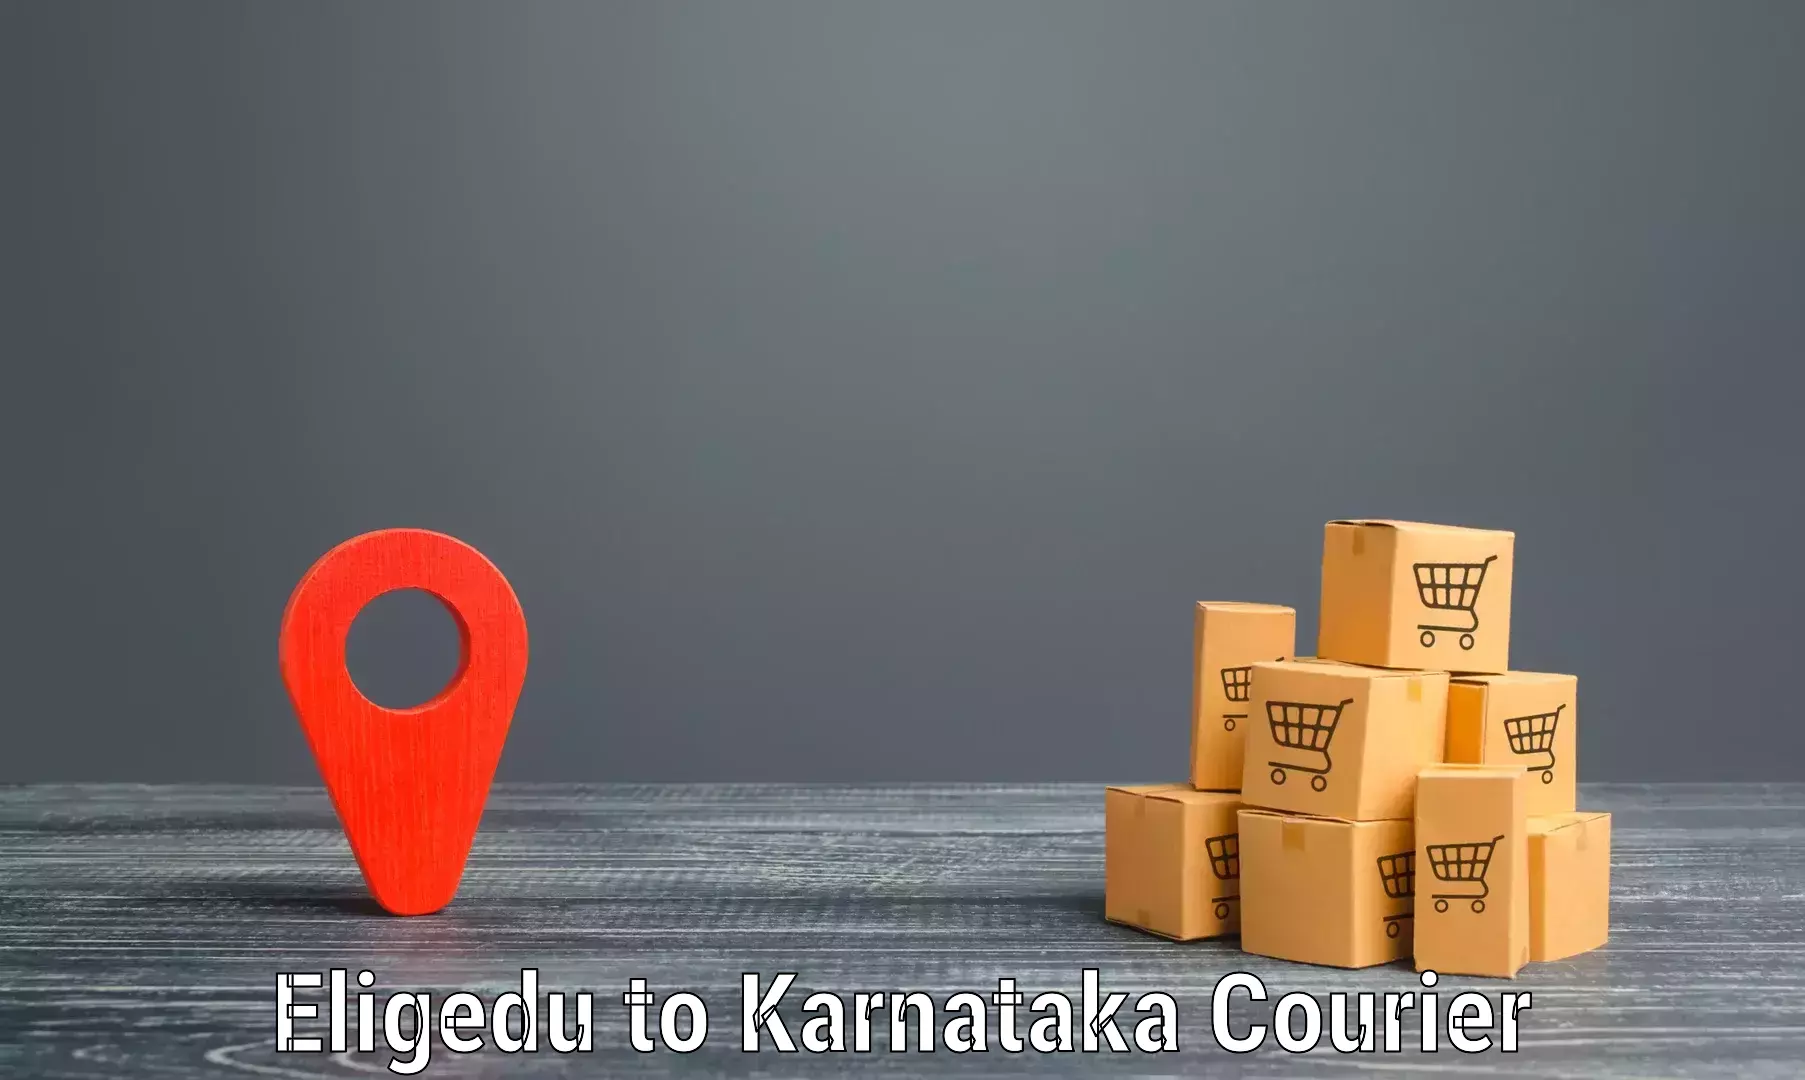 Courier service comparison in Eligedu to Mysore University